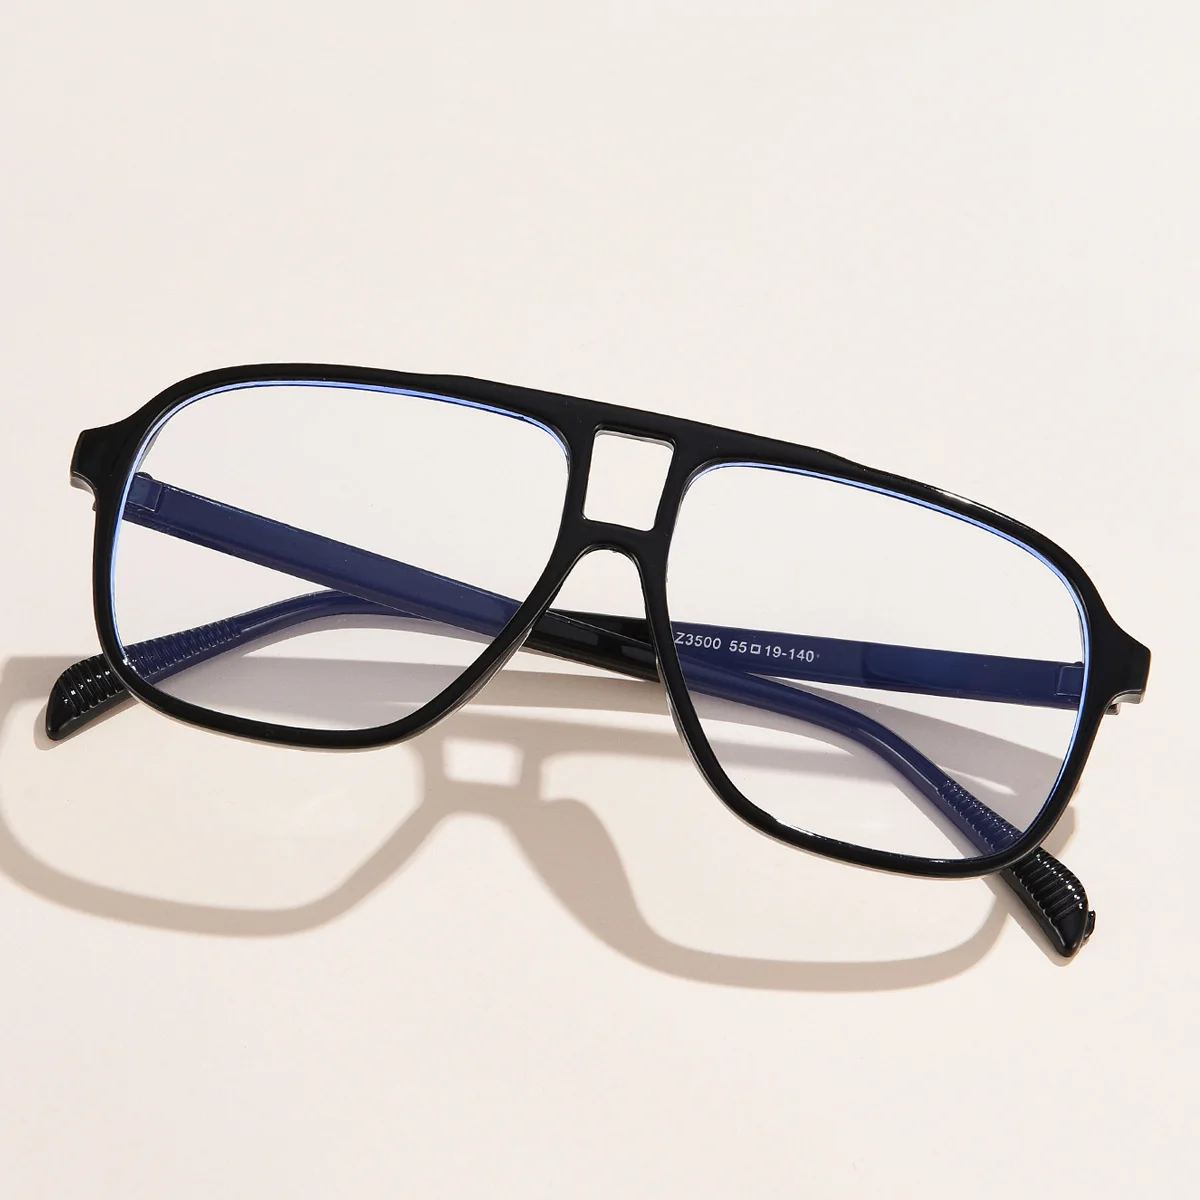 Trendi Naočale Mačka Oko Ženske, Muške Računala Naočale Prevelike Optički Naočale Za Oči Plave Svjetlosti Blokiranje Gafas Okvir Oculos Slika 2